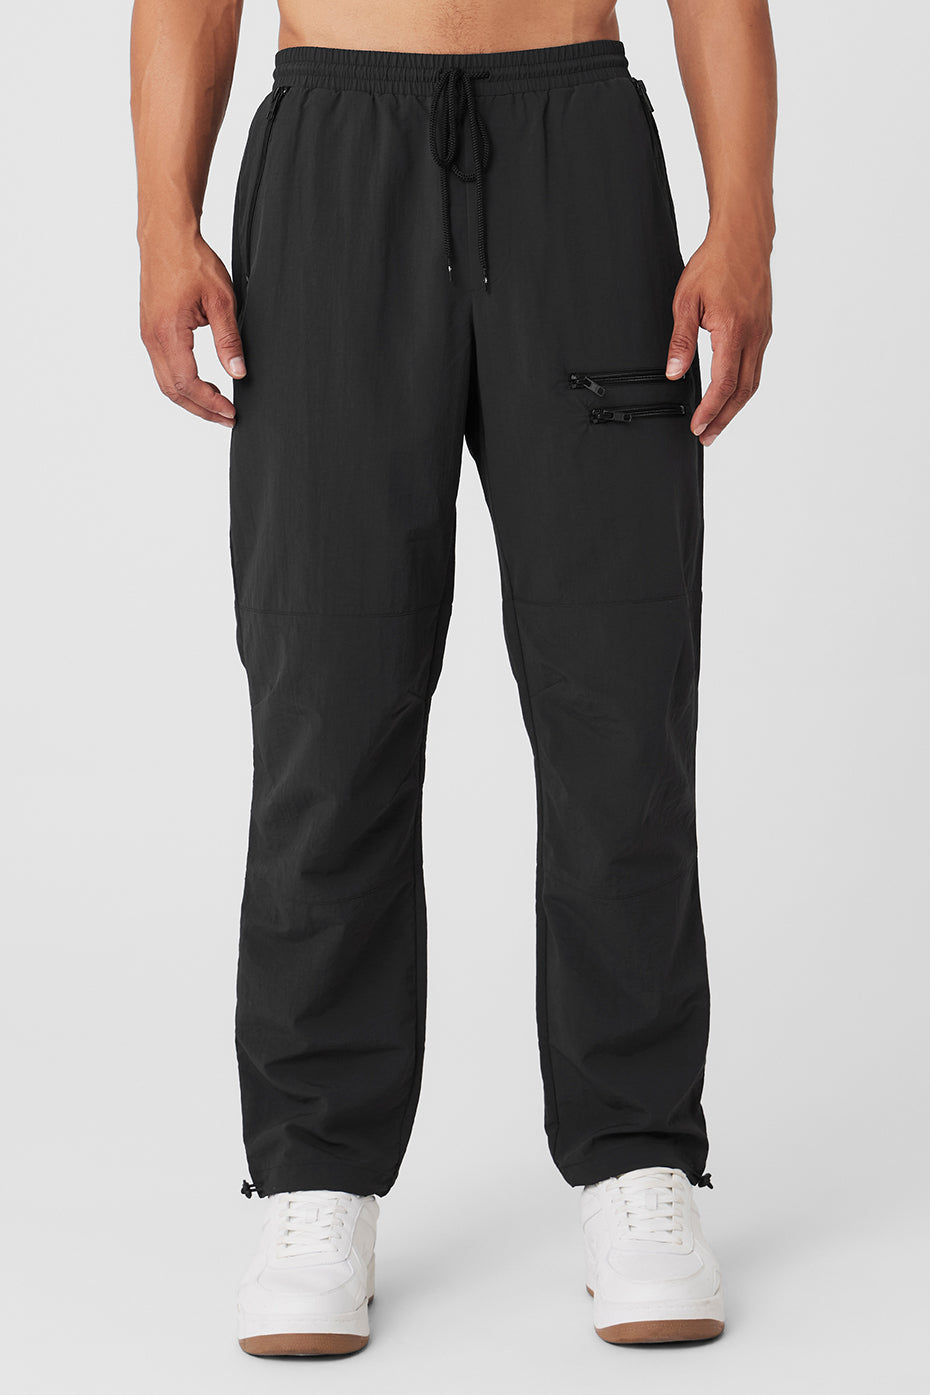 Alo Yoga Alo Accolade Sweatpants Cosmic Grey Gray Size XS - $190